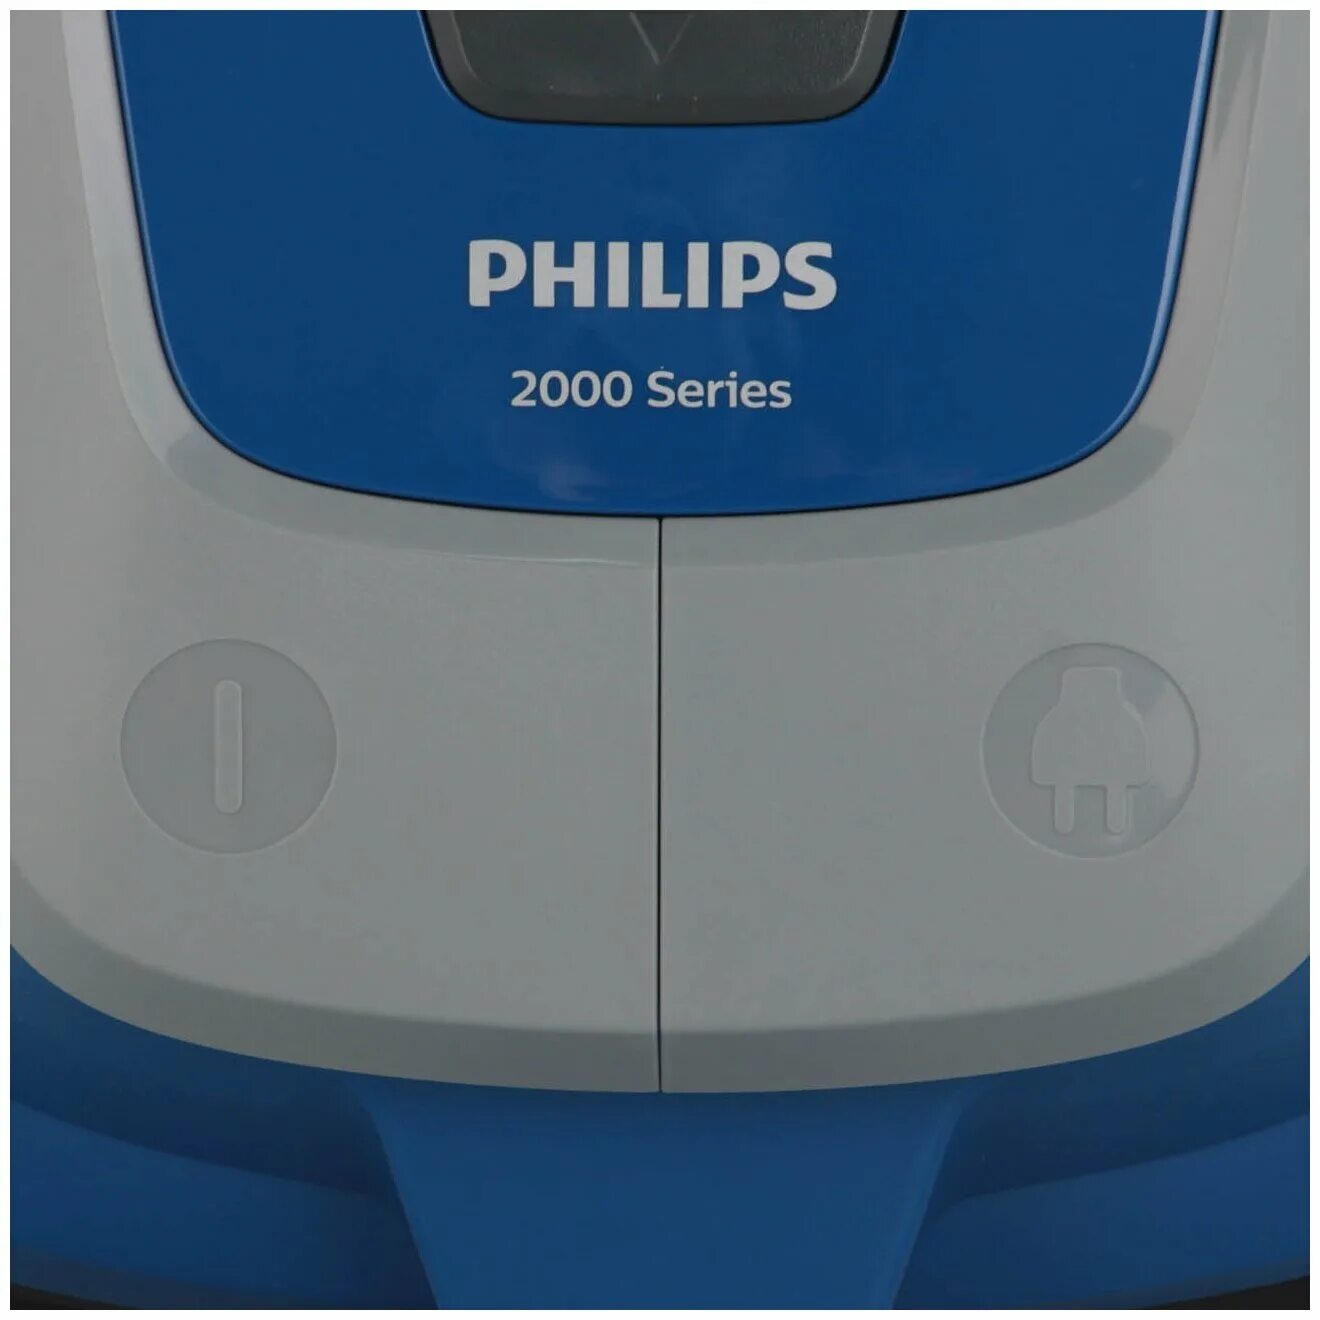 Пылесос Philips xb2062/01. Philips xb2022/xb2023. Пылесос Philips xb2022. Пылесос с контейнером для пыли Philips xb2062/01. 2000 series xb2042 01